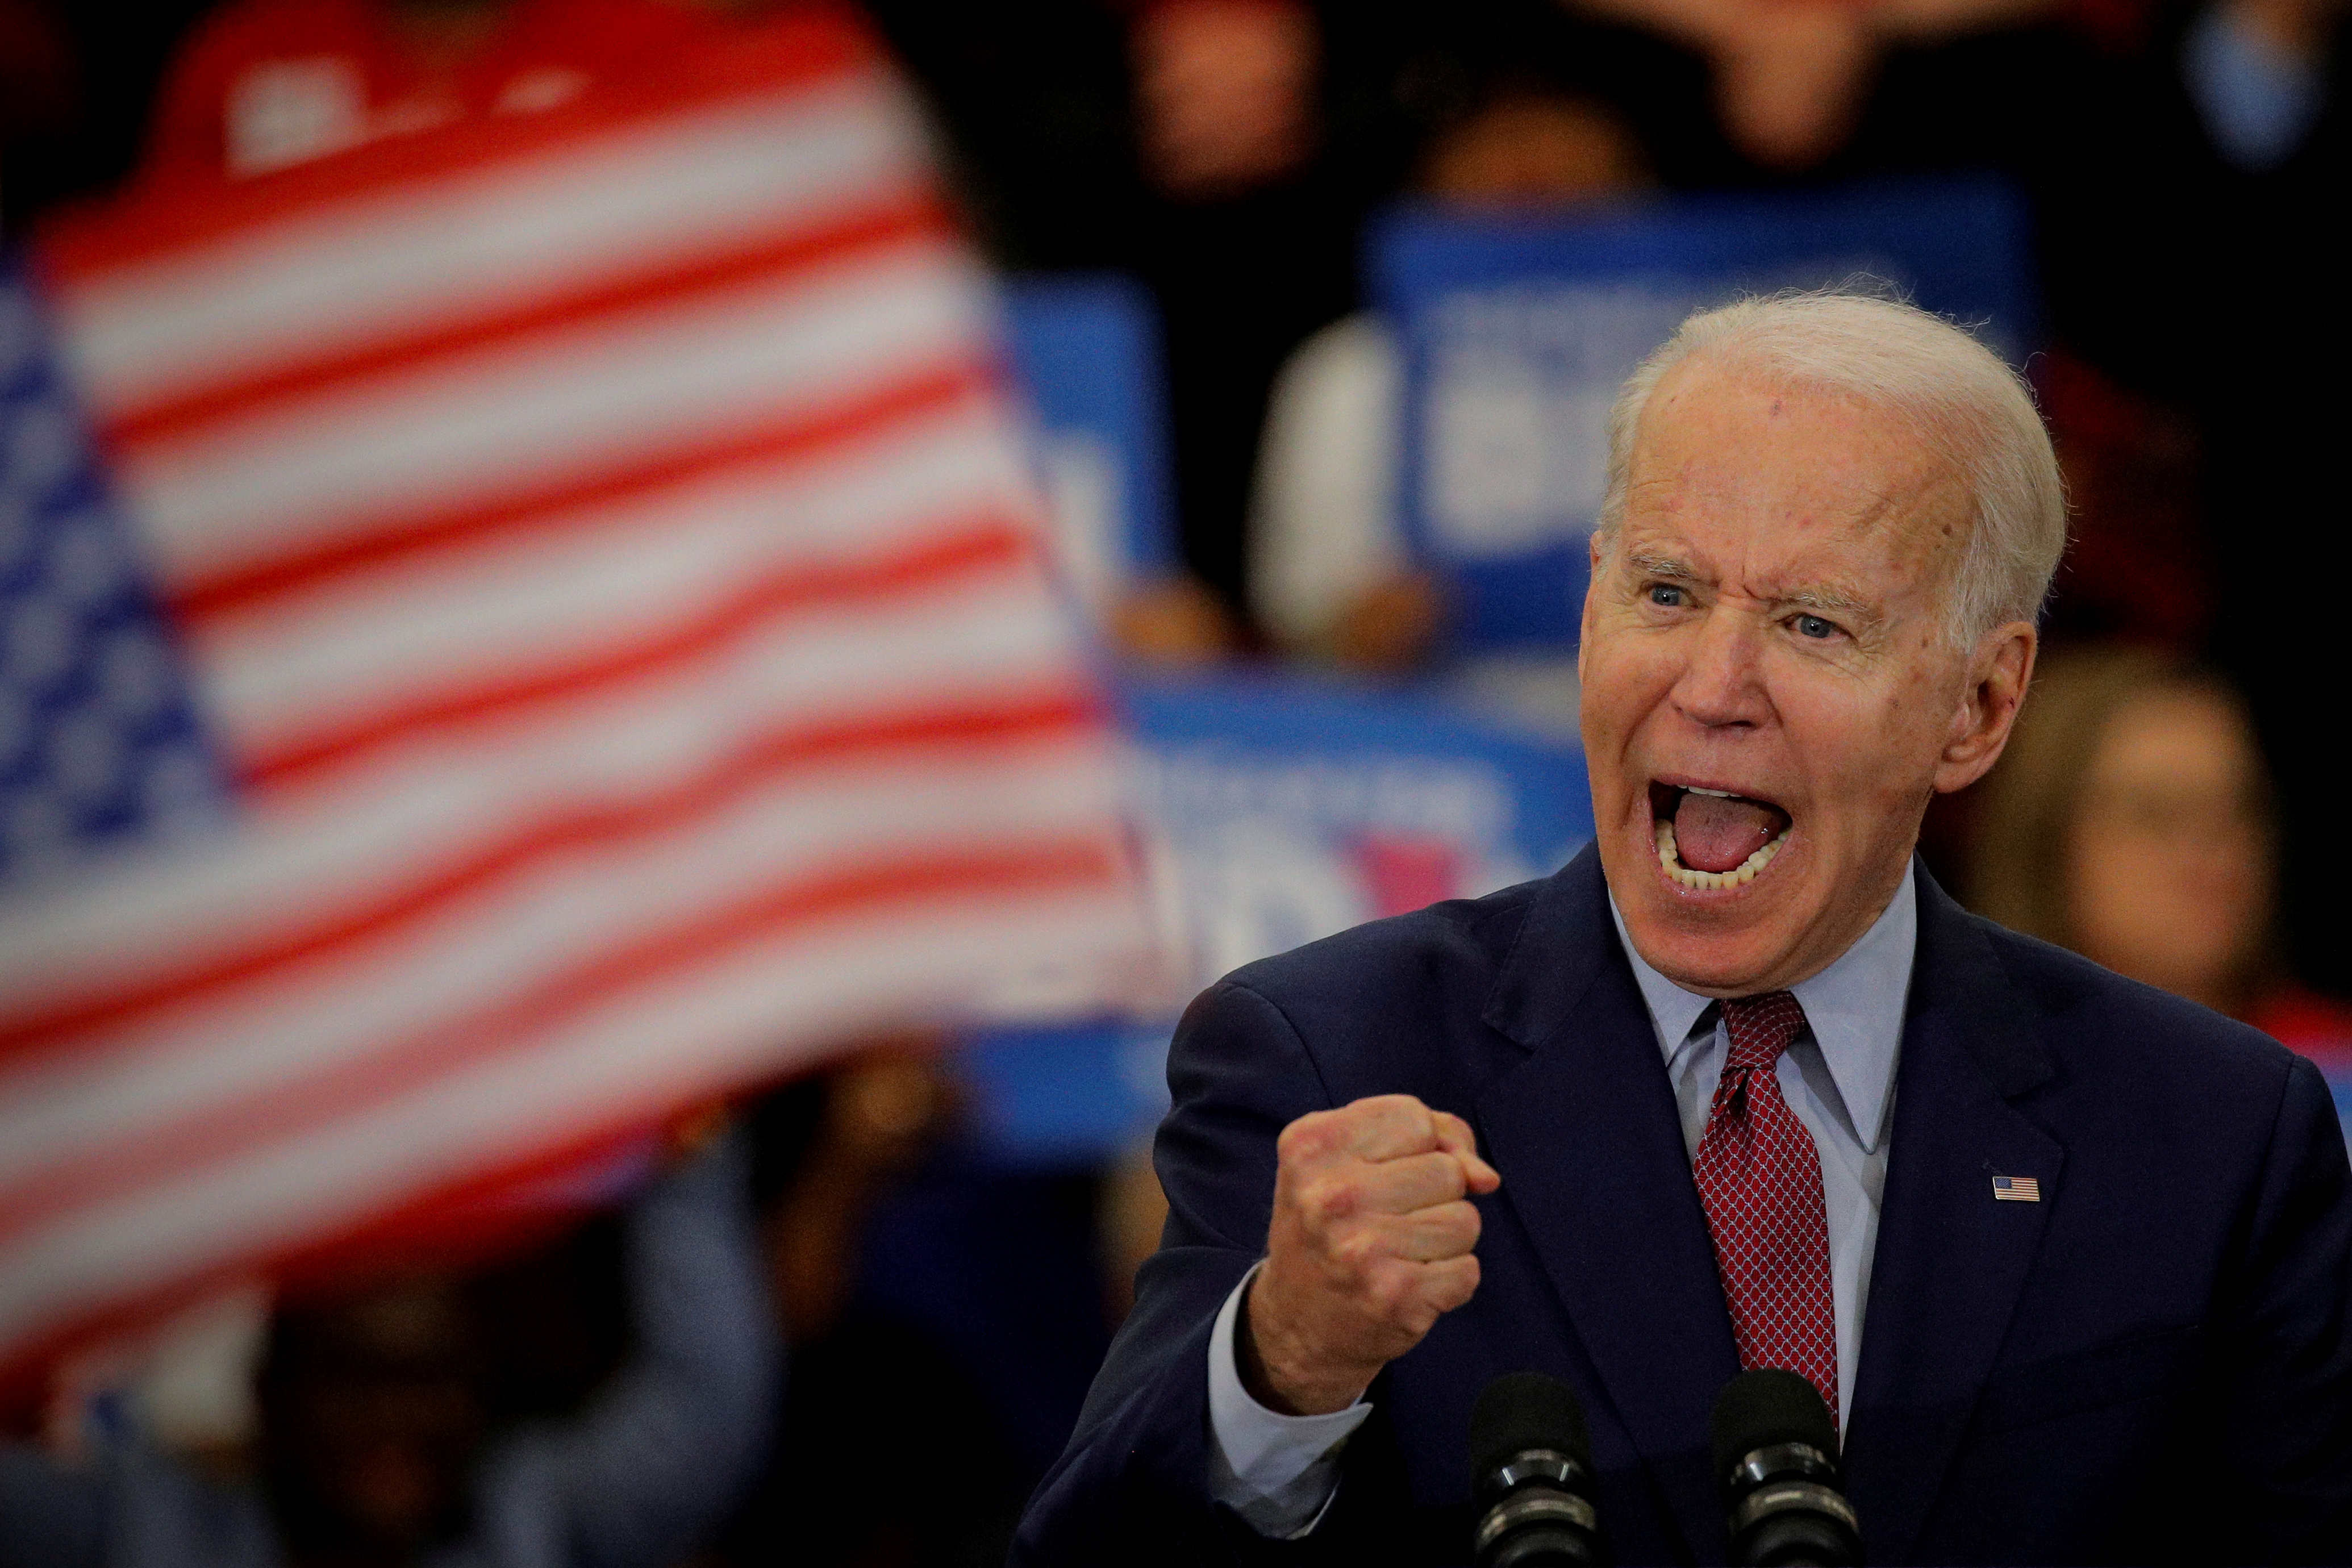 Joe Biden a poucos passos de se tornar o candidato democrata à Presidência  | VEJA